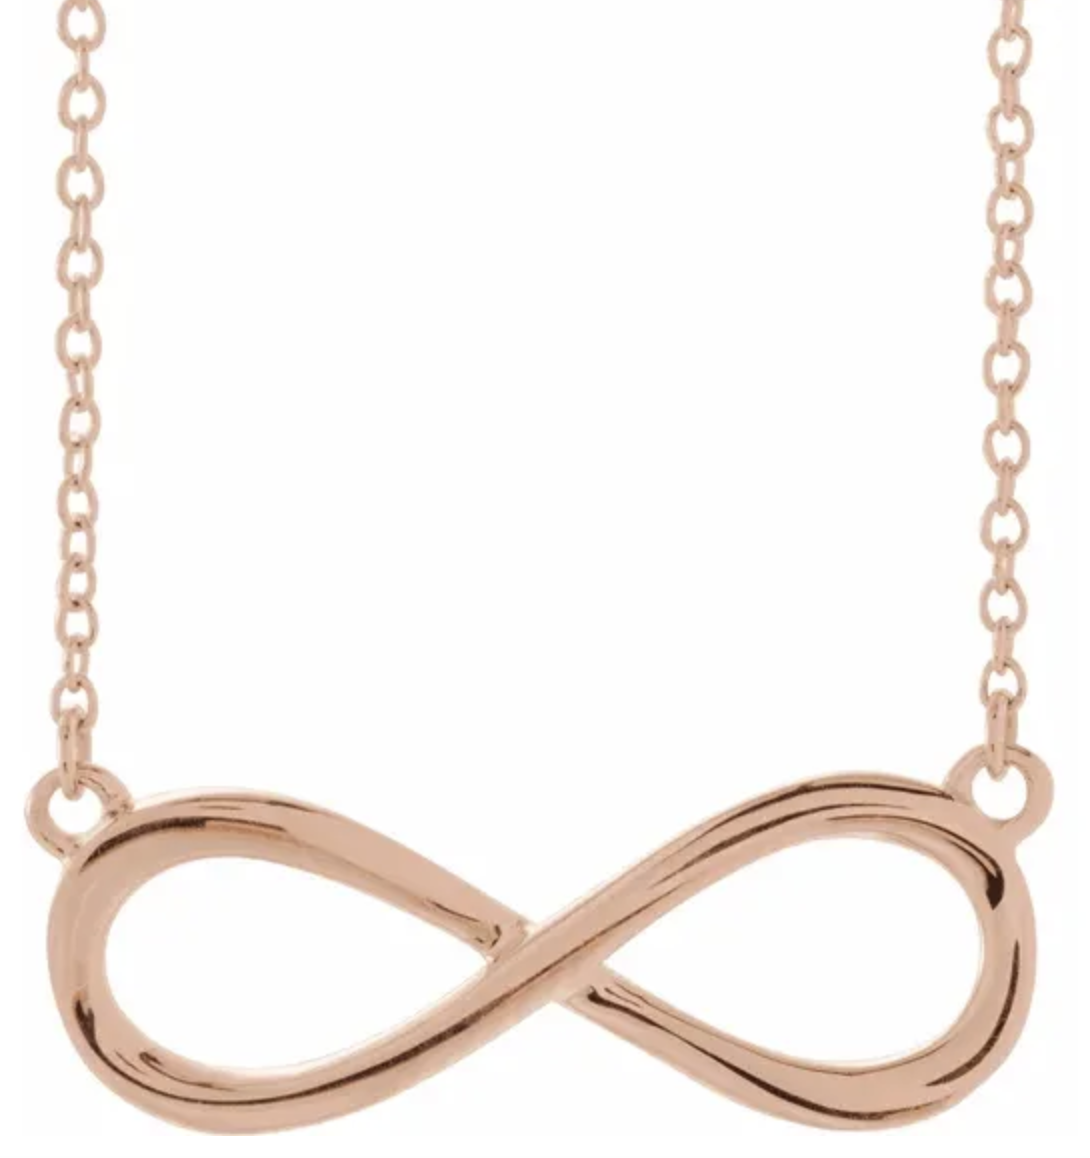 Stuller 14kt gold plain infinity necklace